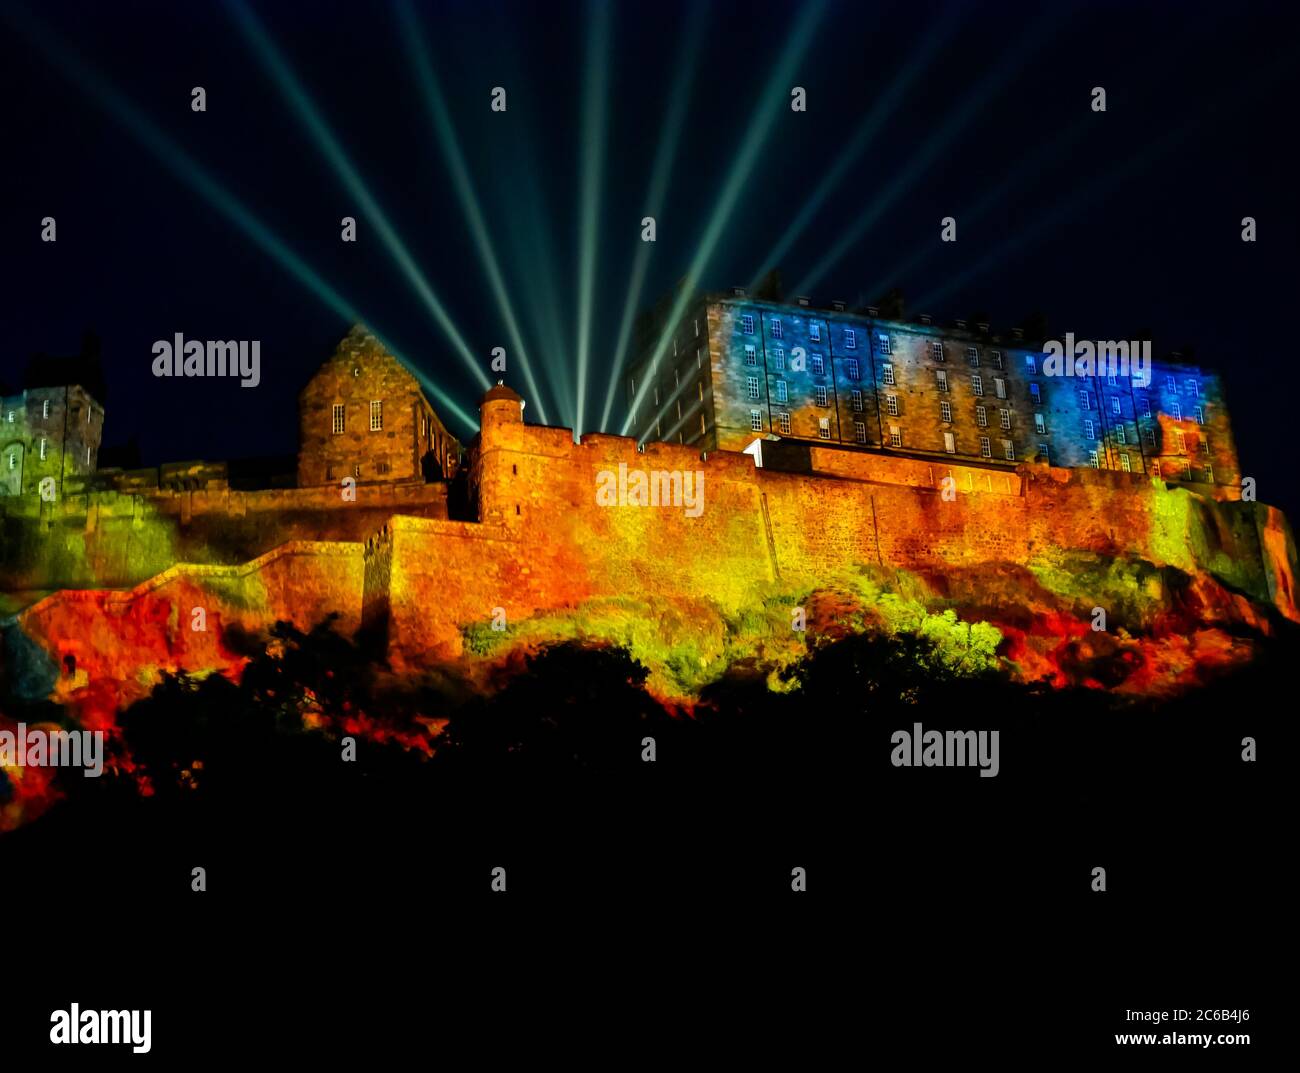 Edinburgh International Festival Standard Life opening event light projection onto Edinburgh Castle, Deep Time in 2106, Scotland, UK at night Stock Photo